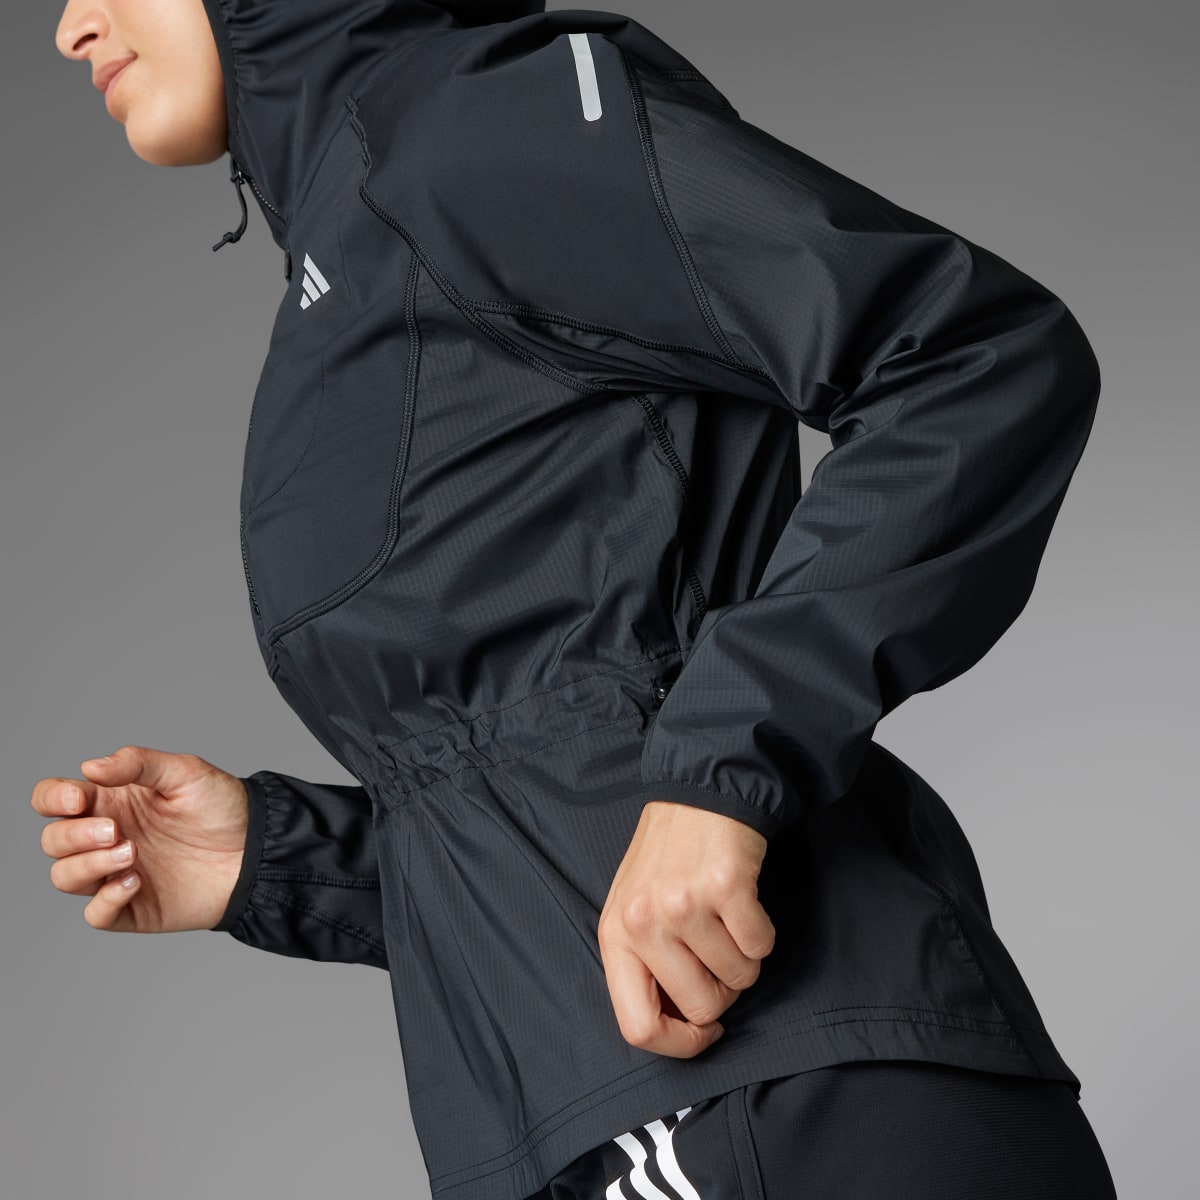 Adidas Ultimate Jacket. 8